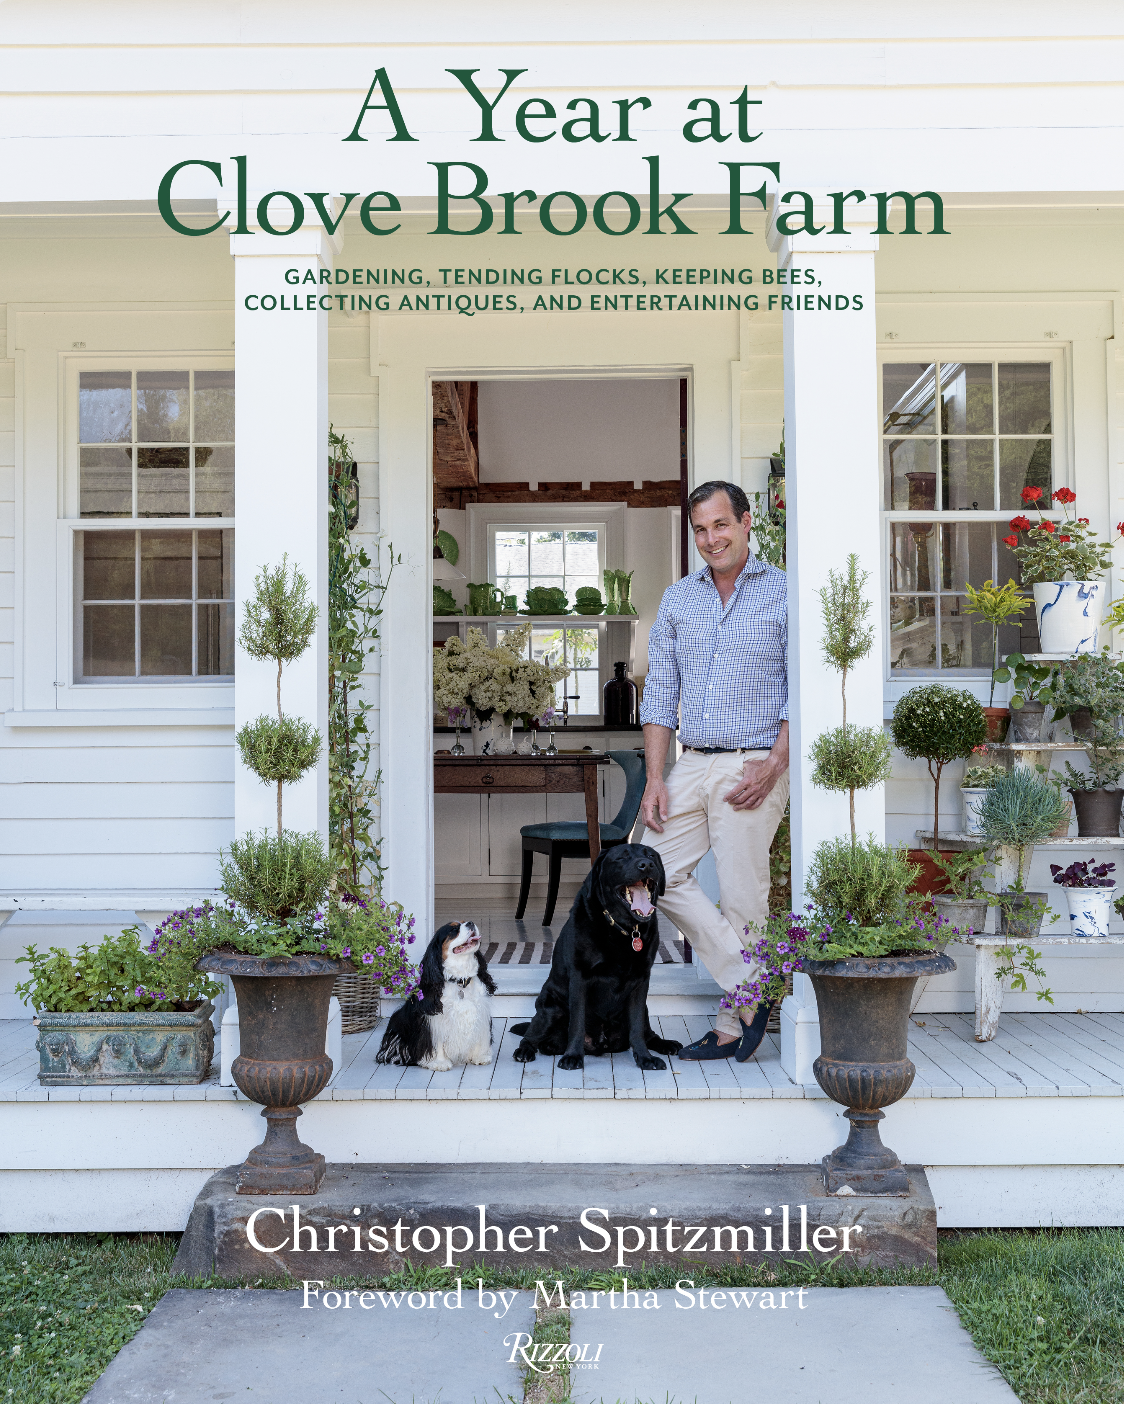 Christopher Spitzmiller: A Year at Clove Brook Farm